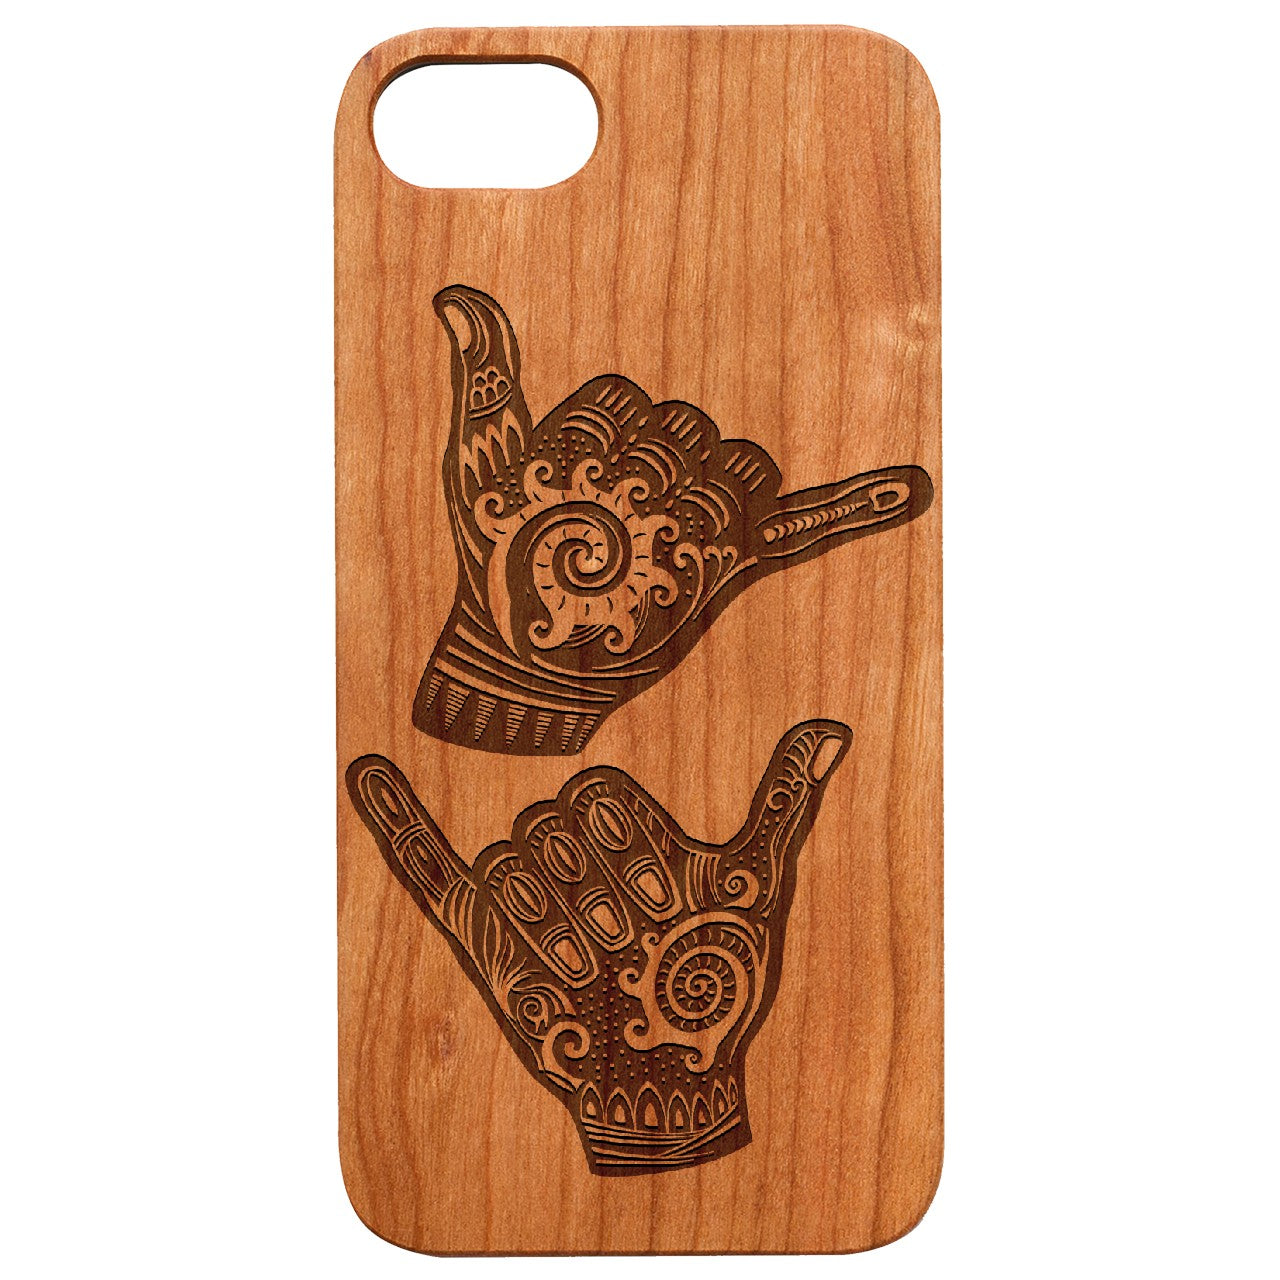  Shaka Hands - Engraved - Wooden Phone Case - IPhone 13 Models